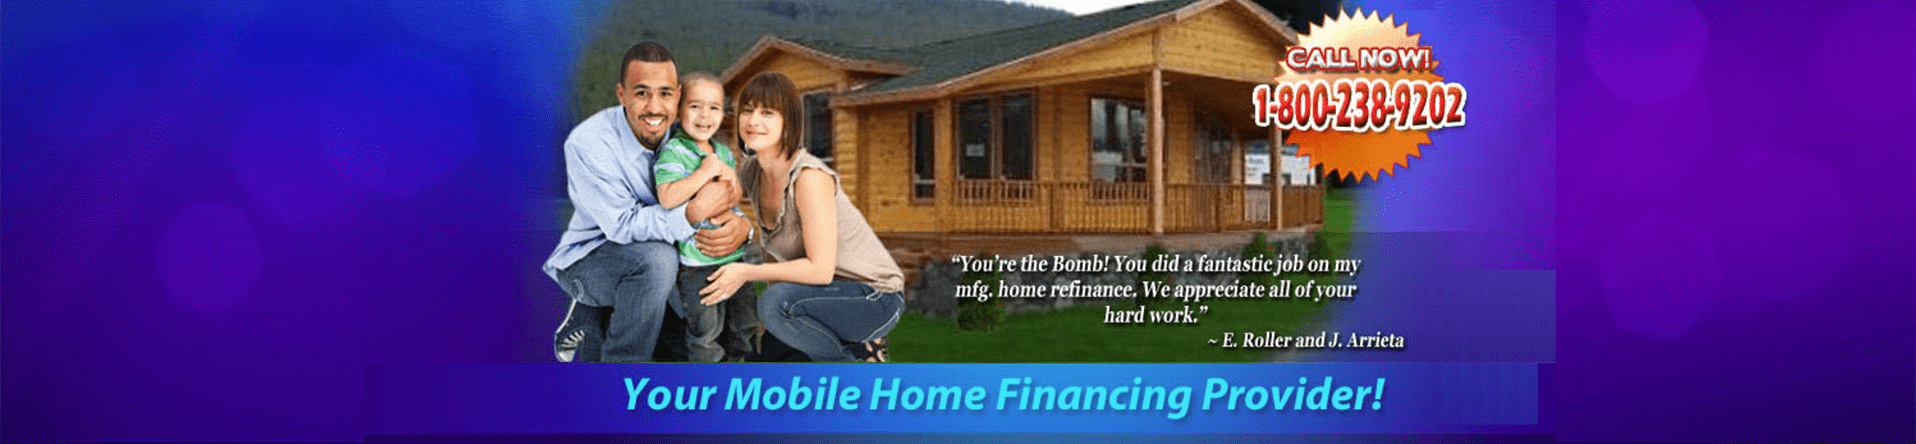 mobile home loan rates calculator